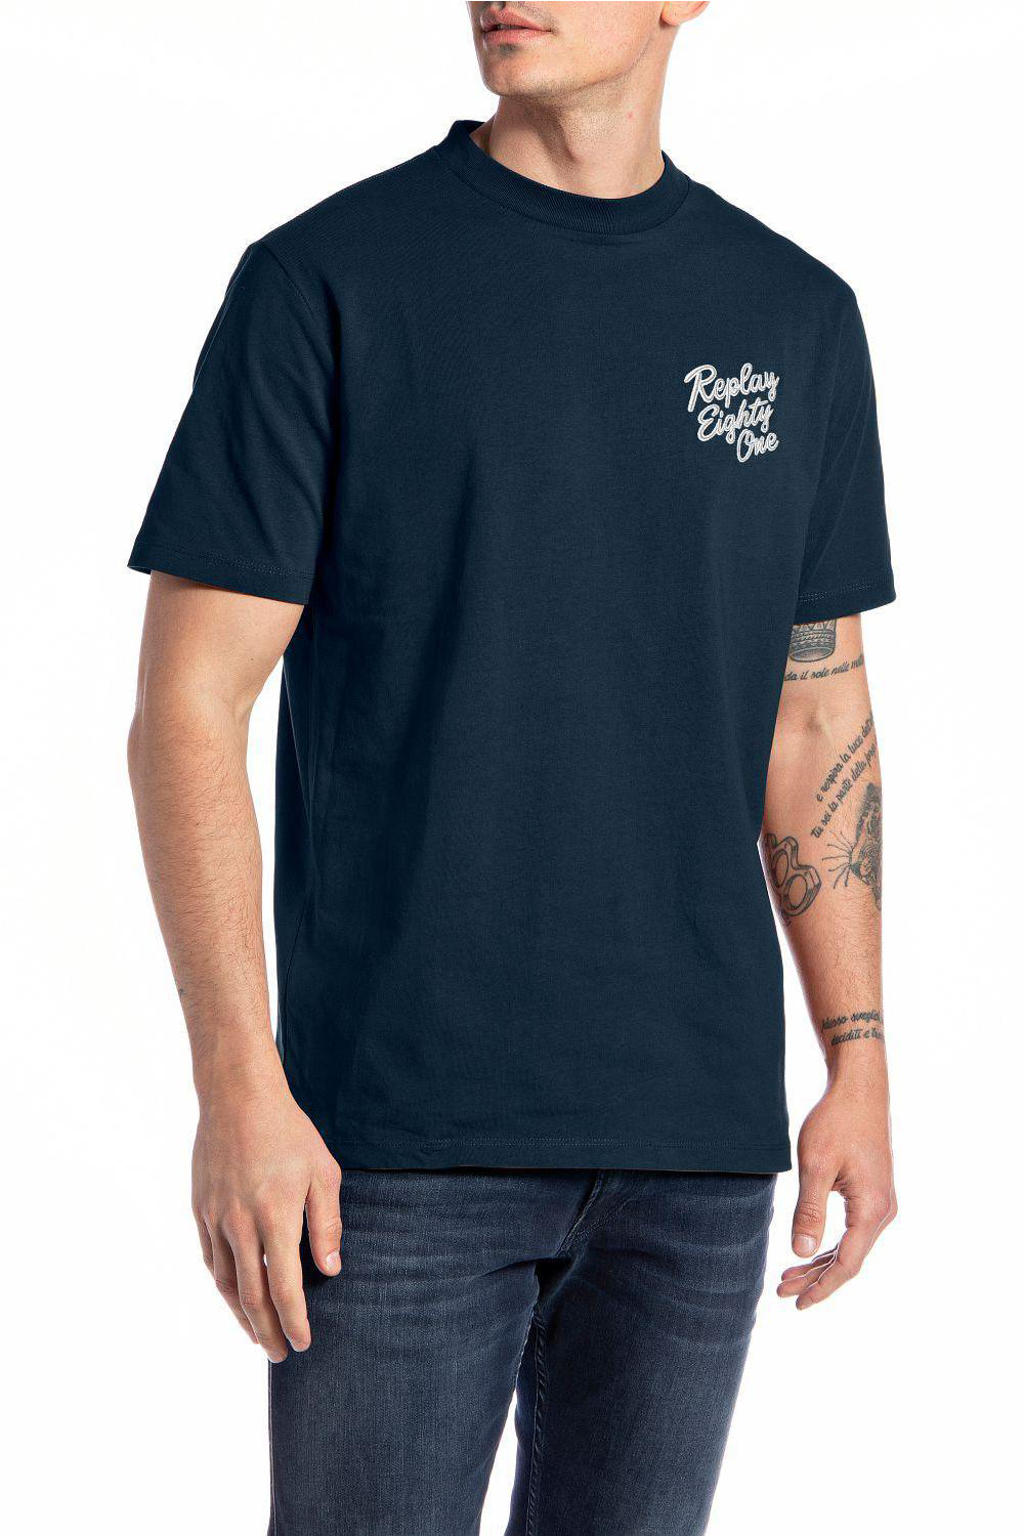 REPLAY T-shirt met logo black